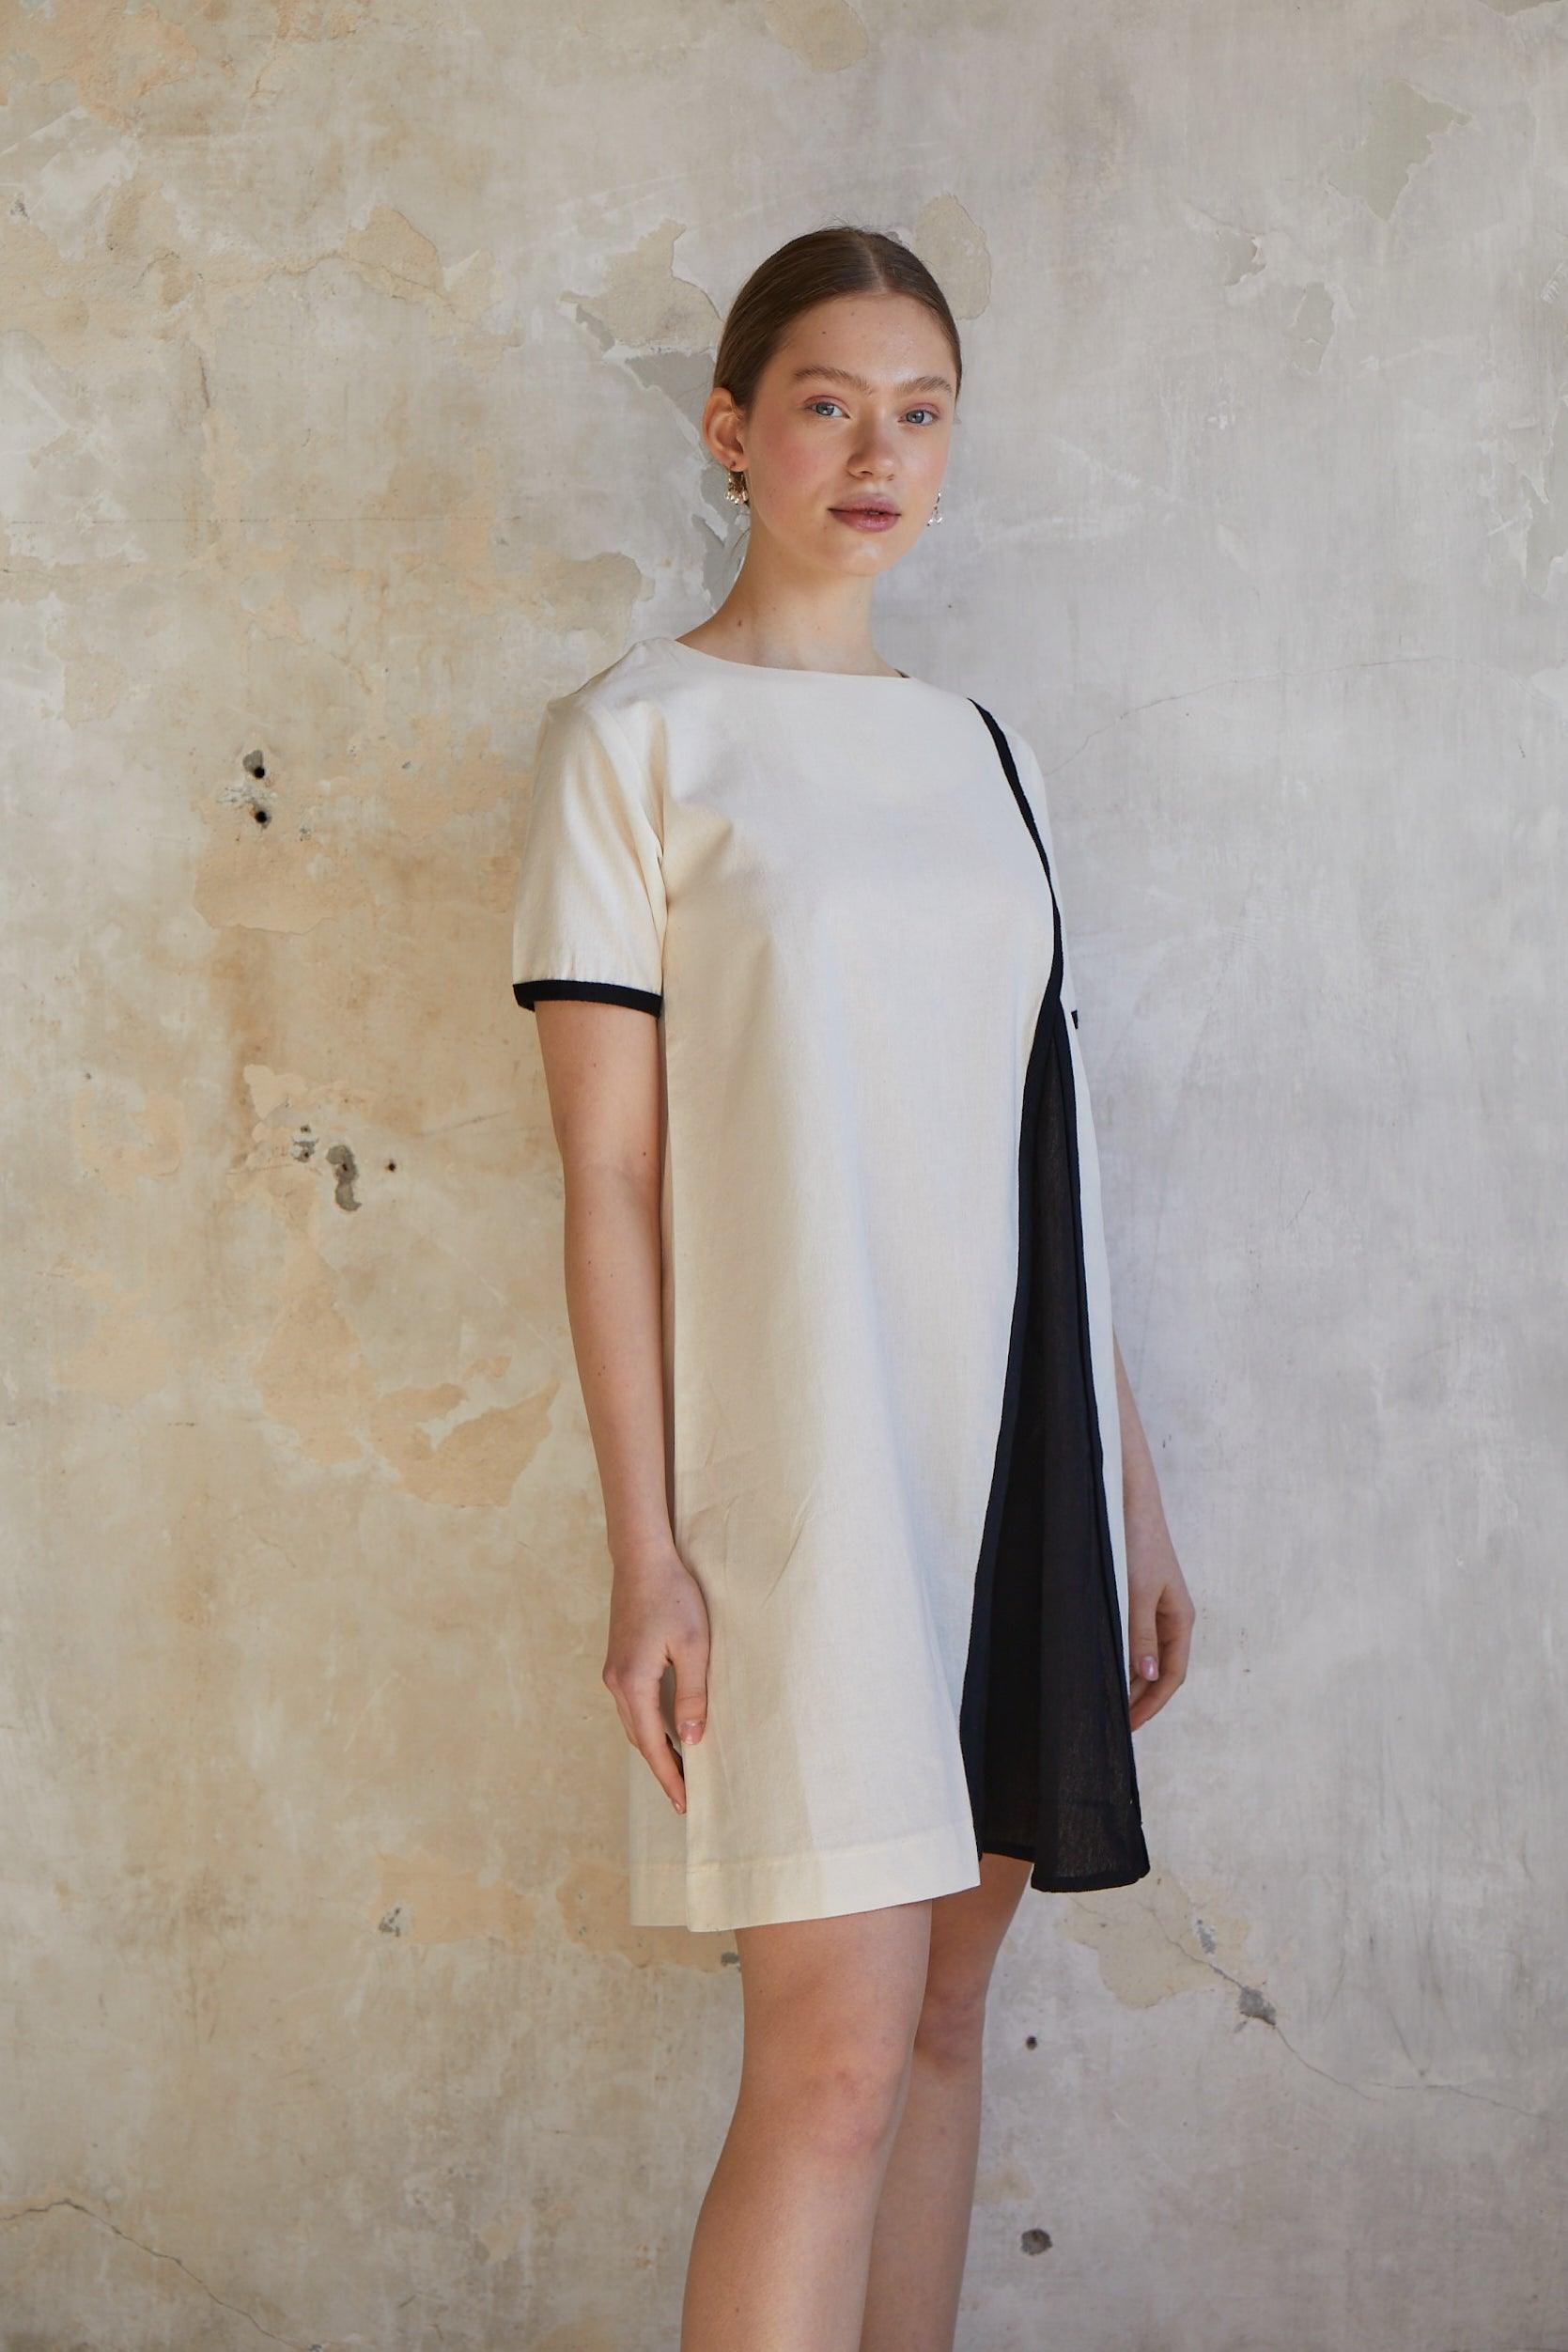 Mini Raw Dress with Pleat Detail - 100% Organic Cotton - trendynow